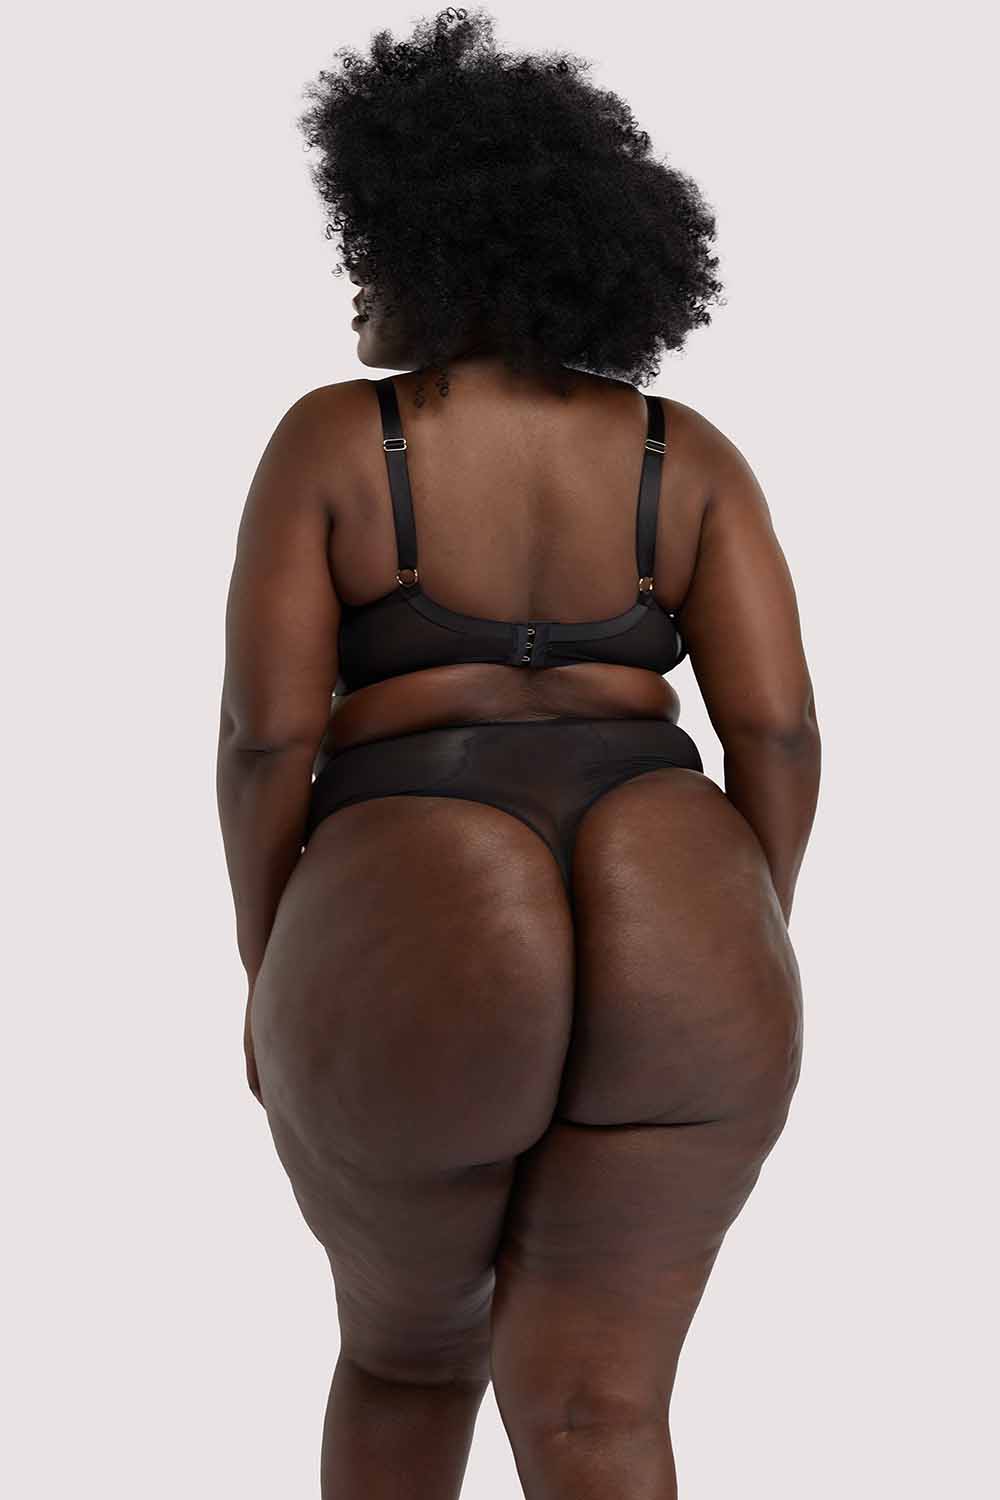 bob valenzuela add photo thick black women in thongs